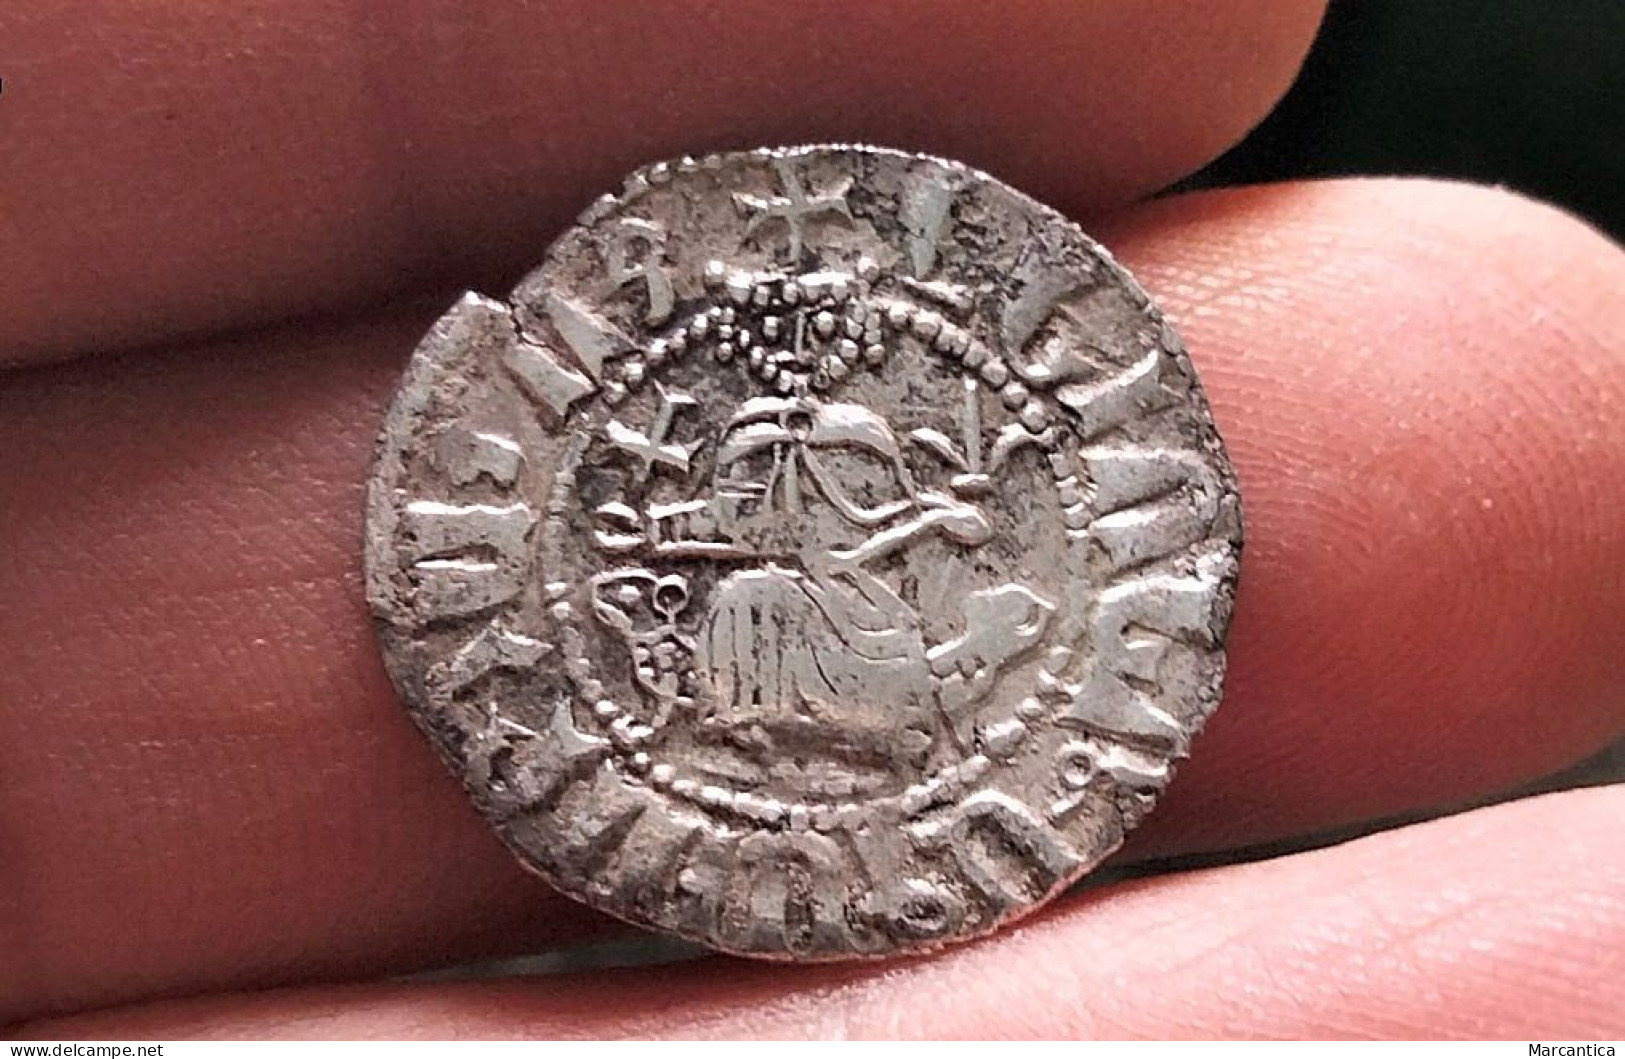 Armenian Silver Coin Tram Of King Levon I - 1198 To 1219 AD. - Armenien